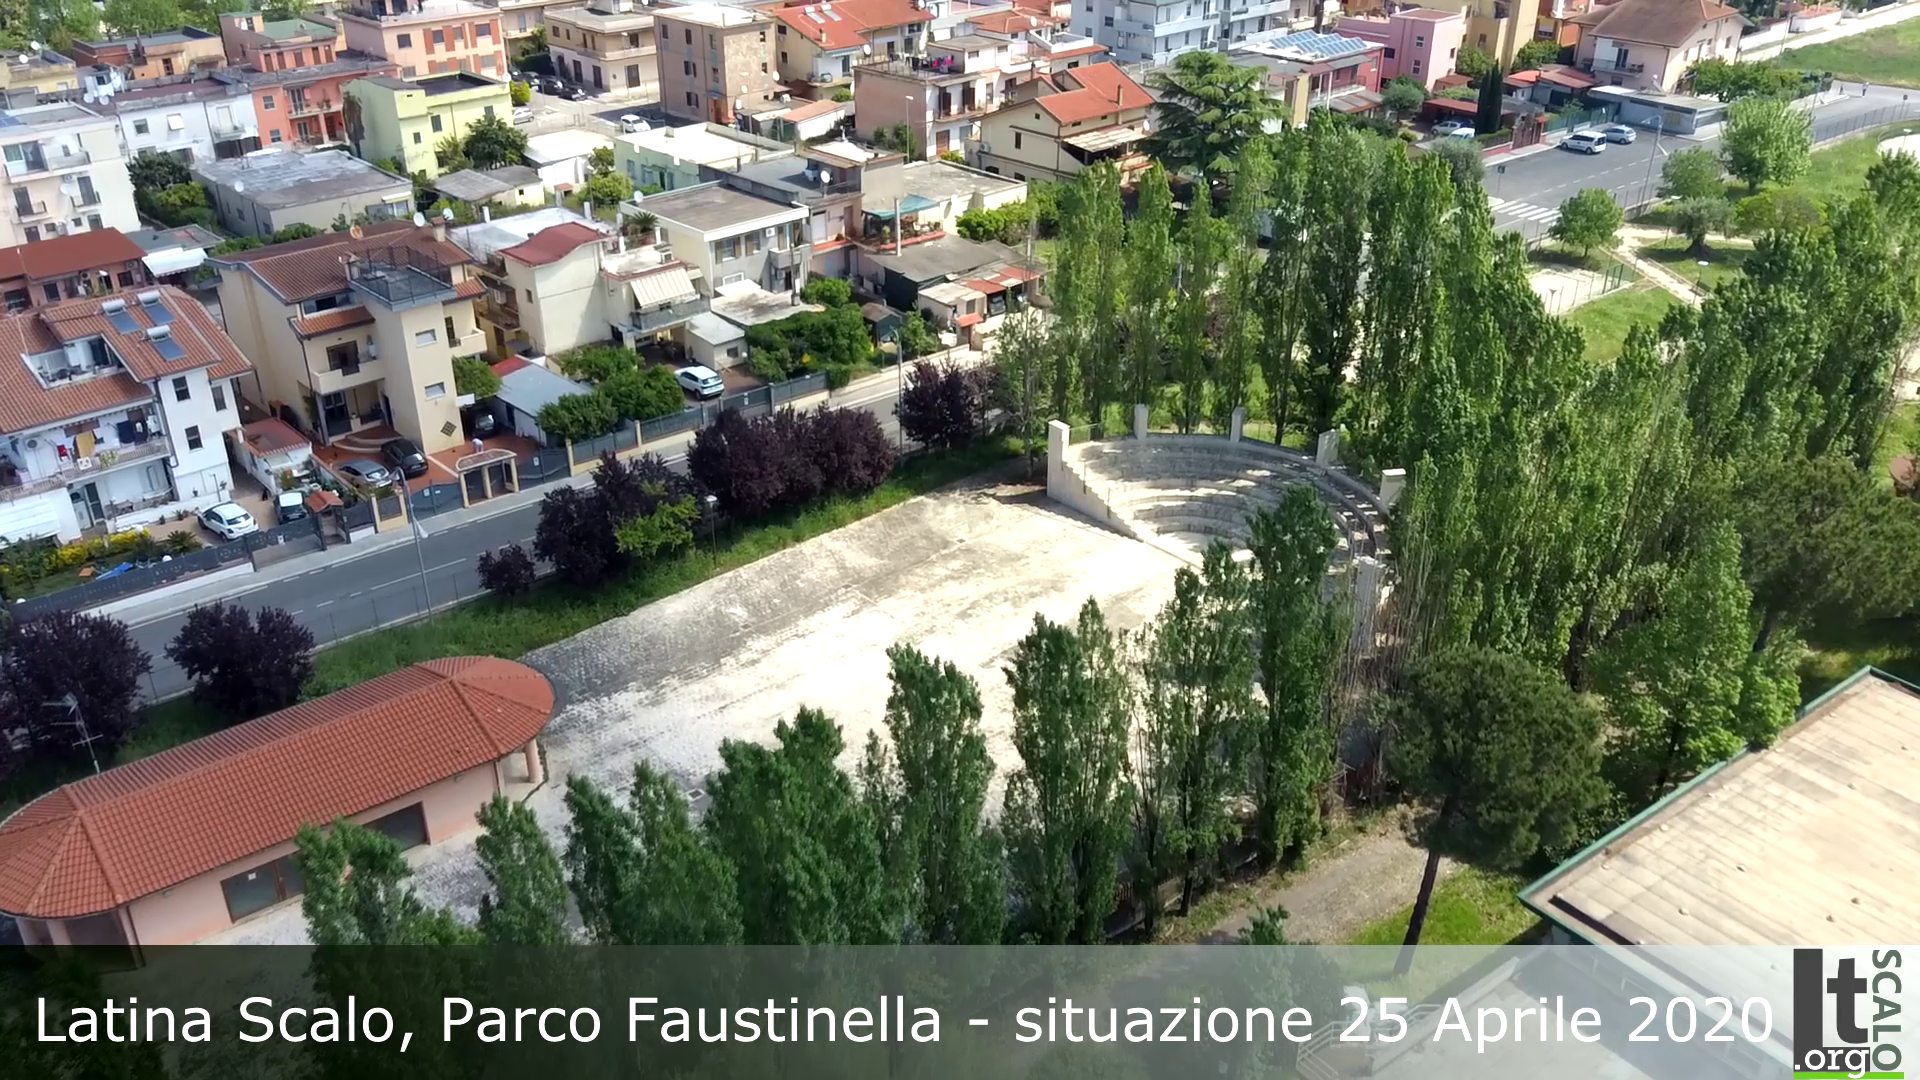 Parco Faustinella